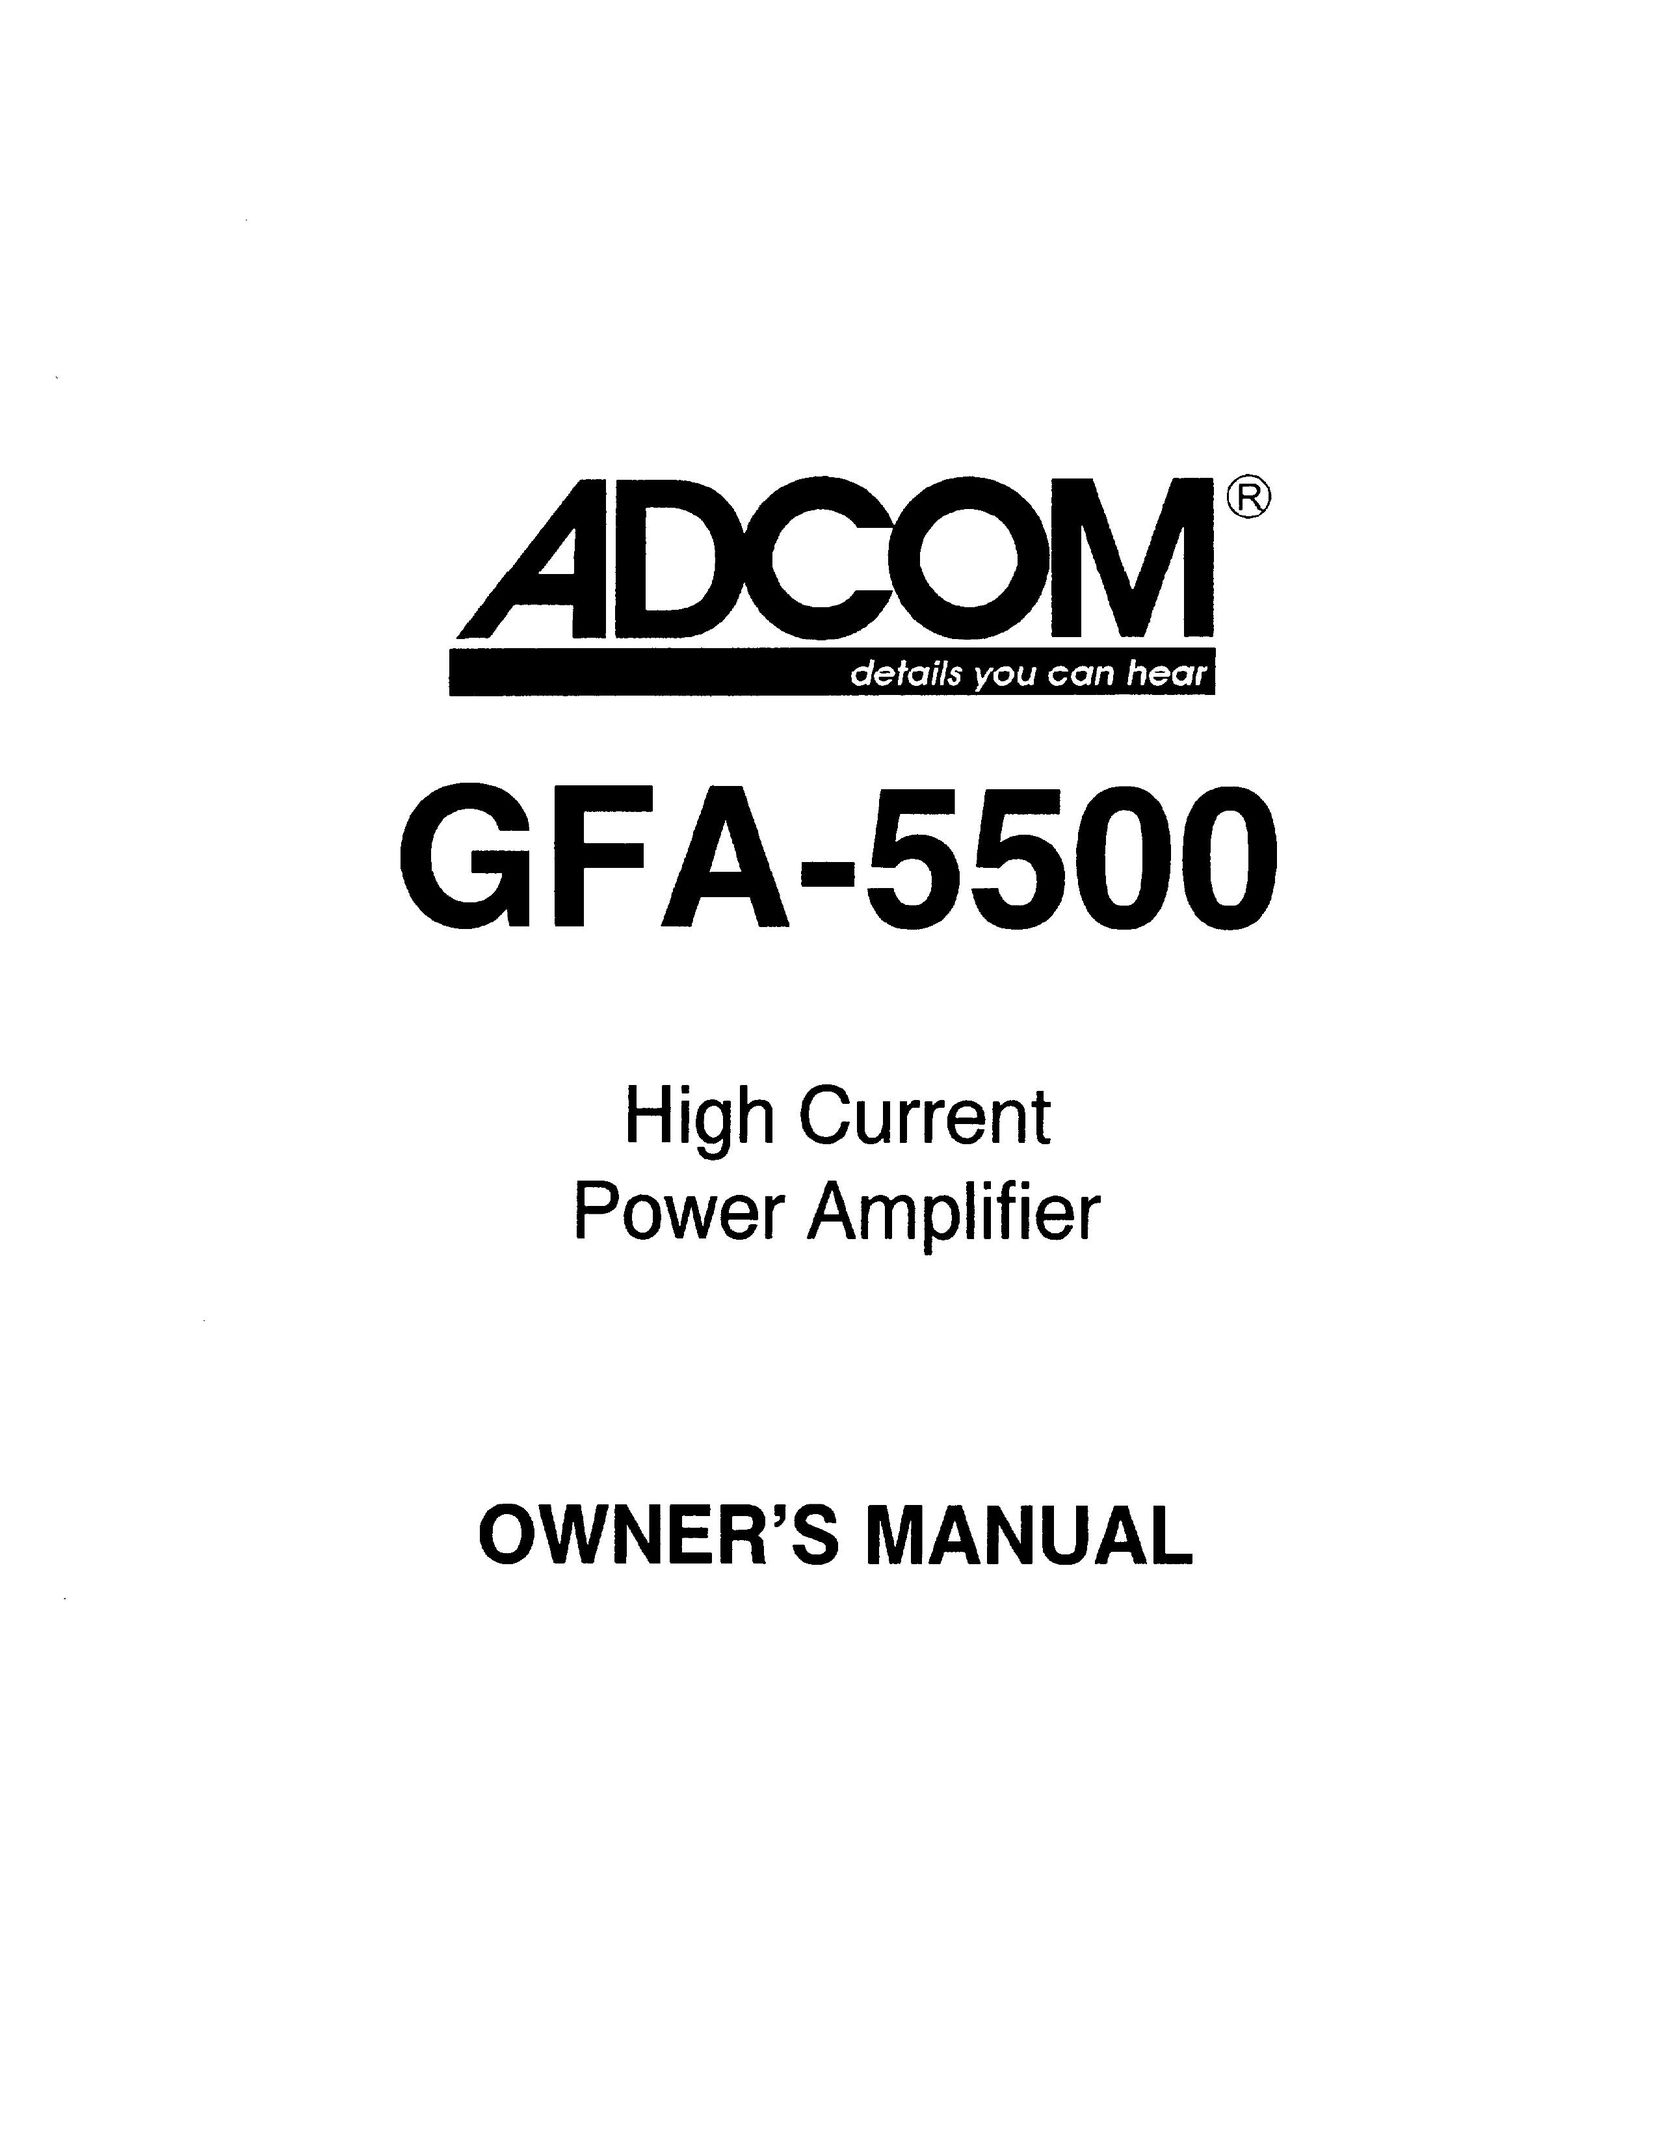 Adcom GFA-5500 All in One Printer User Manual